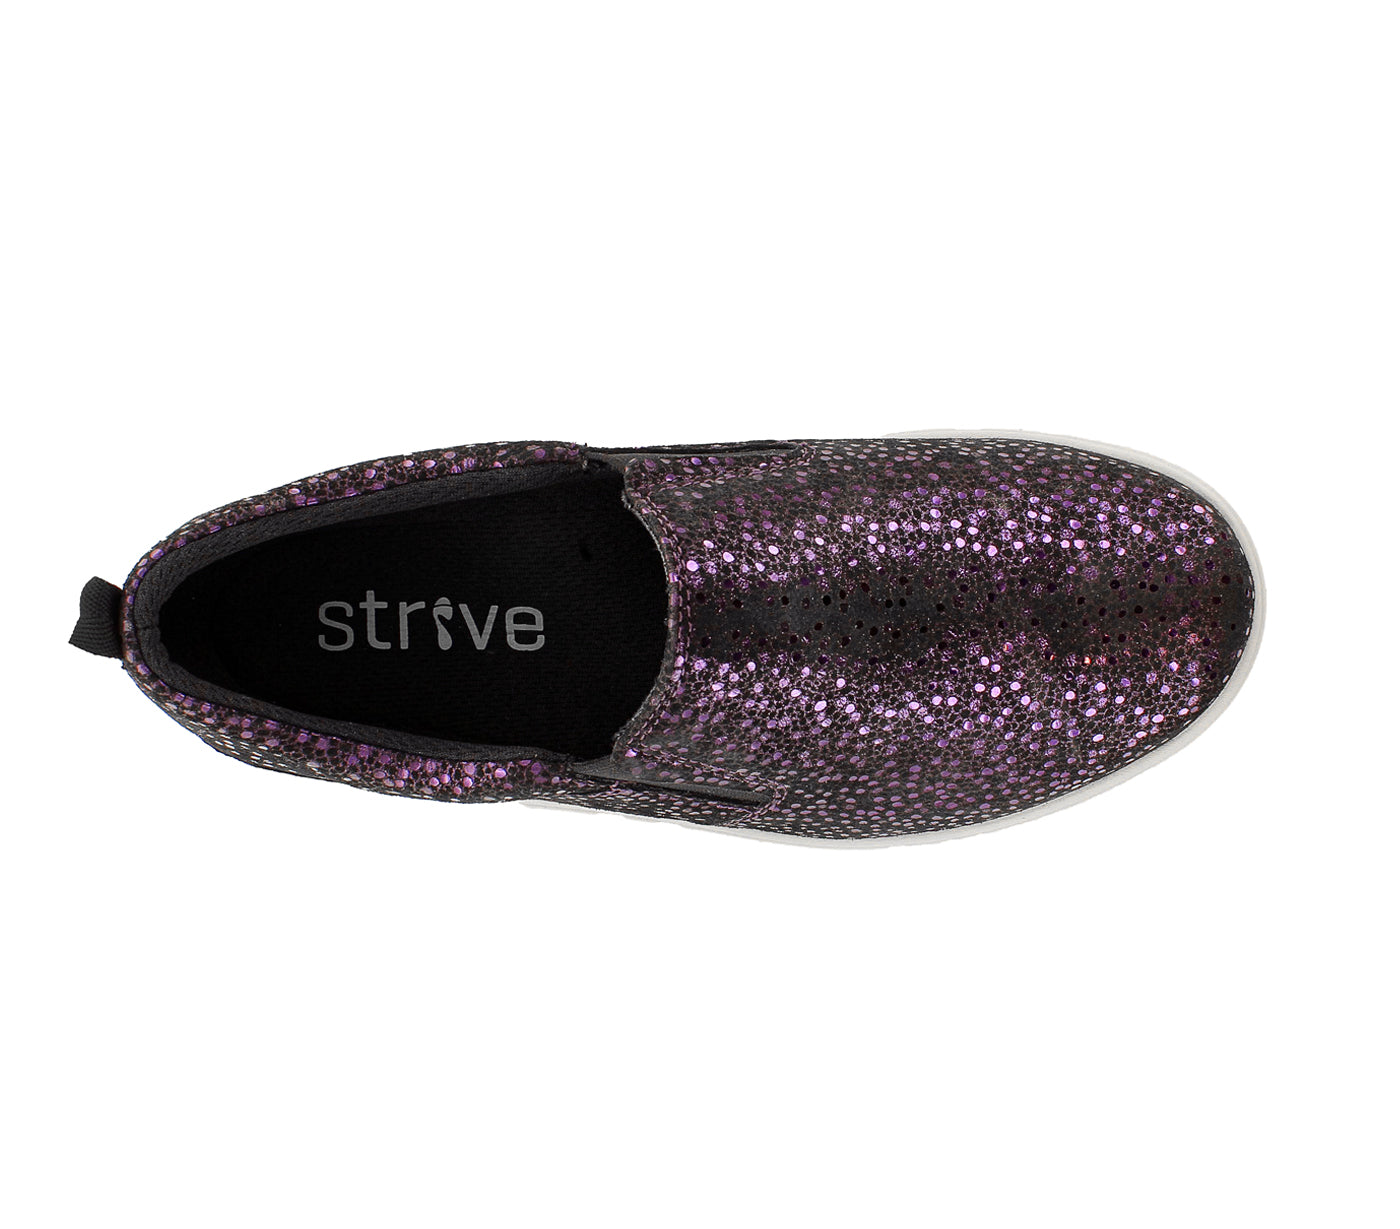 Strive Florida II Ladies Black Sparkle Textile Arch Support Slip On Shoes